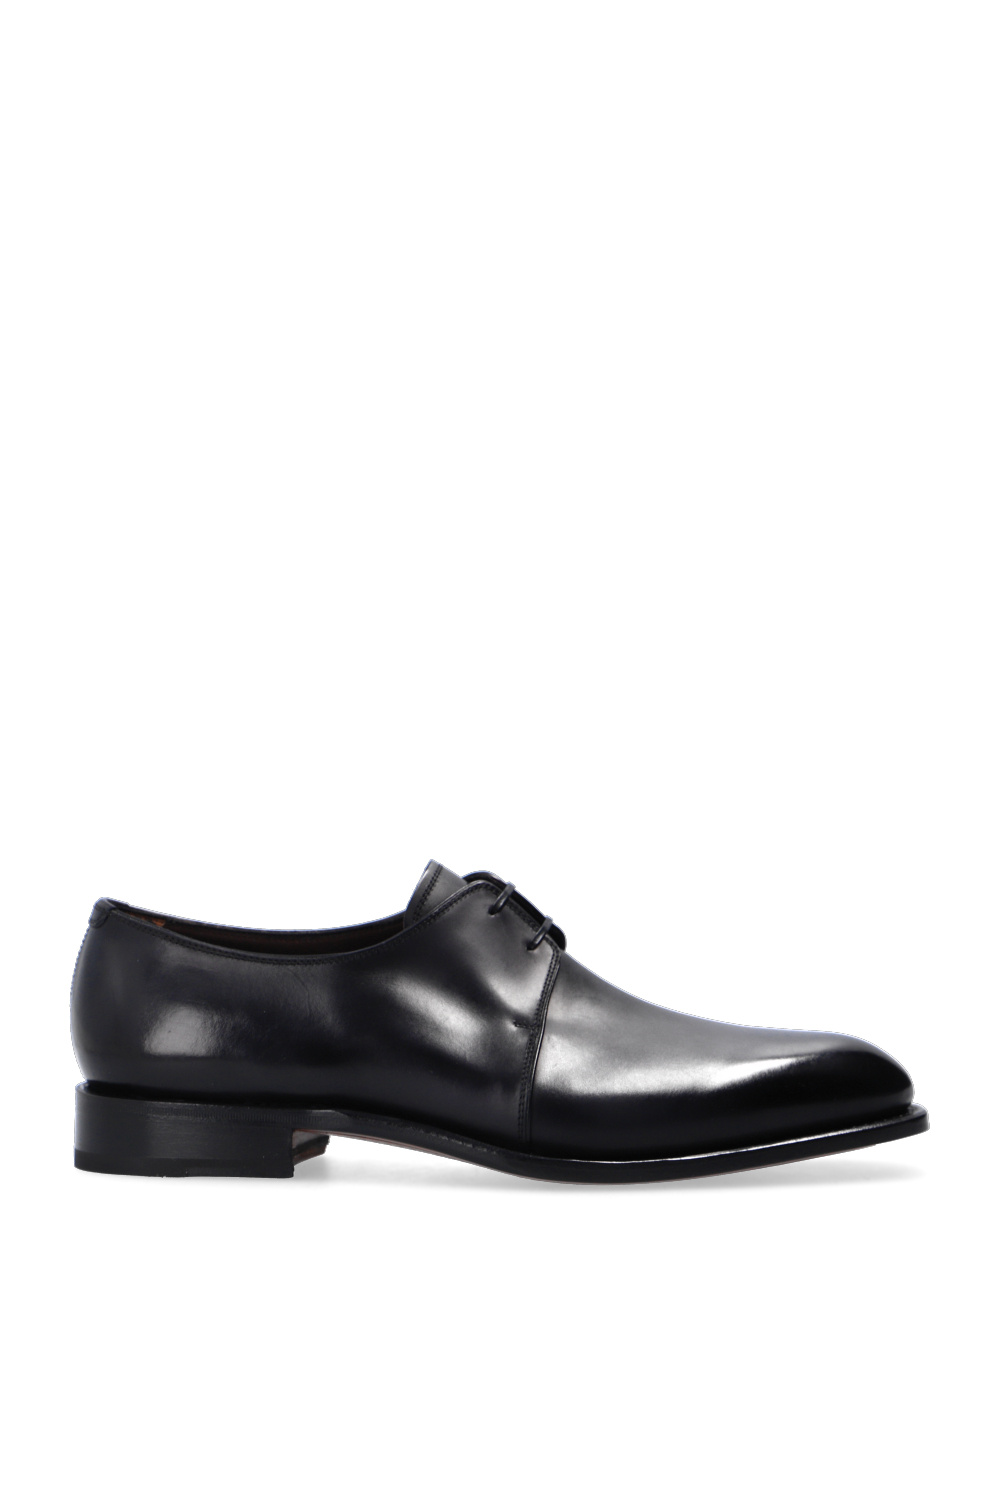 FERRAGAMO ‘Napoli’ leather shoes | Men's Shoes | Vitkac